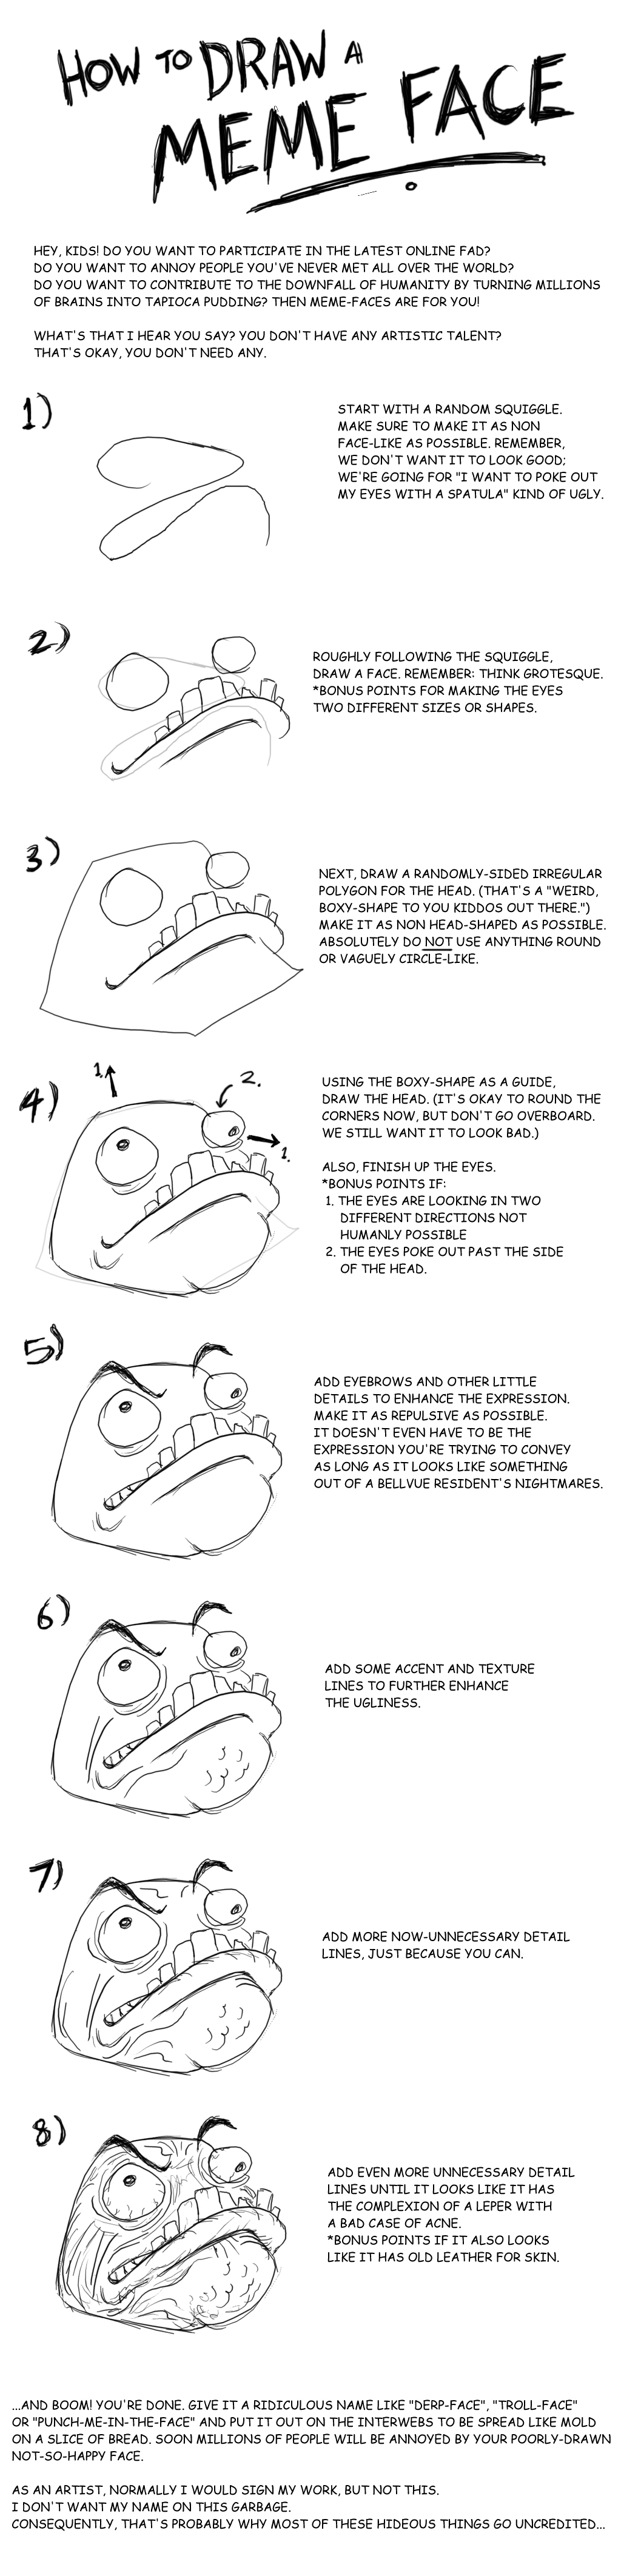 How to Draw a Meme Face by CalamityKangaroo on DeviantArt